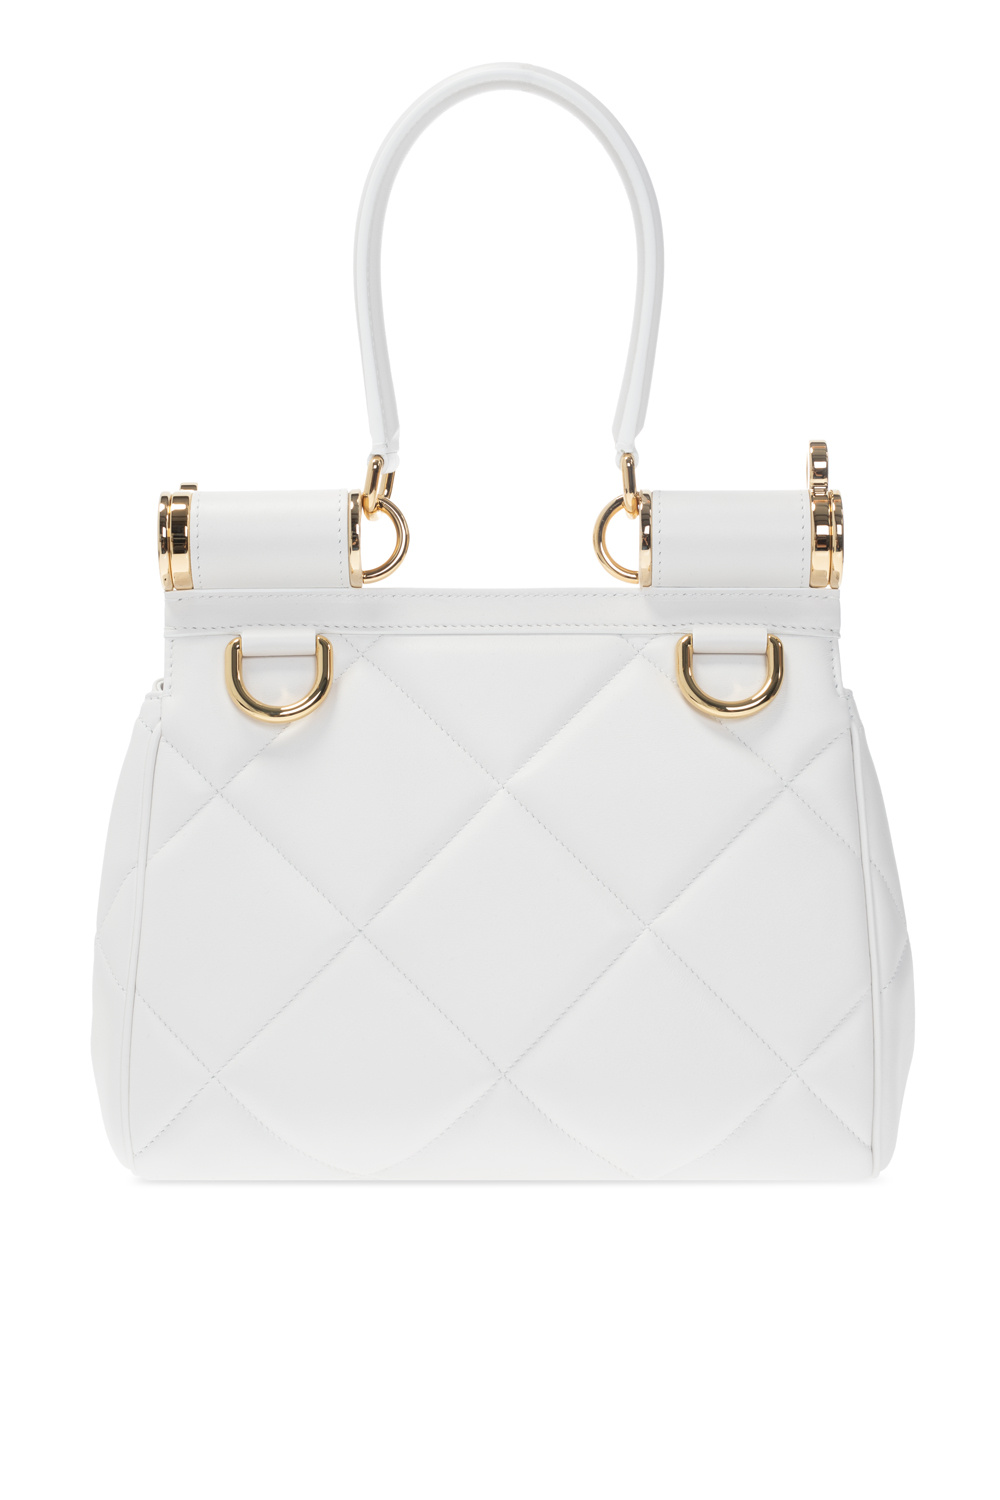 Dolce&Gabbana White Sicily Medium Handbag